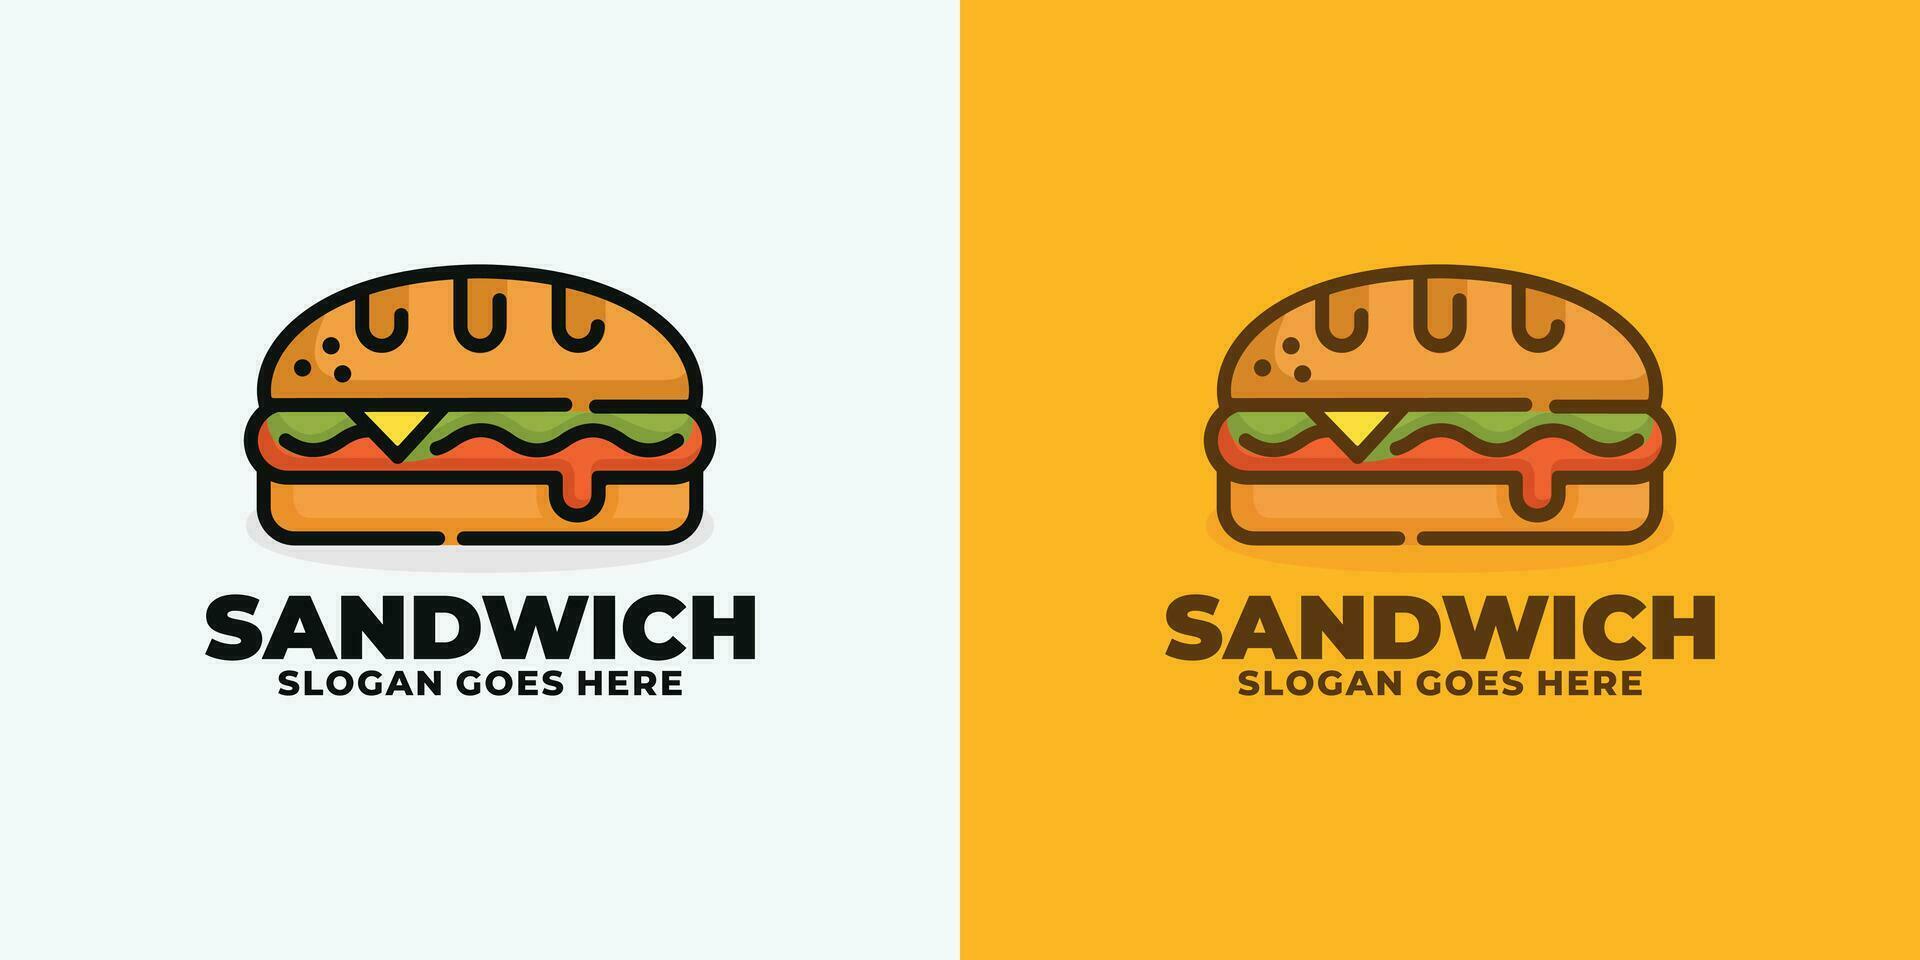 Sandwich logo design vector illustration